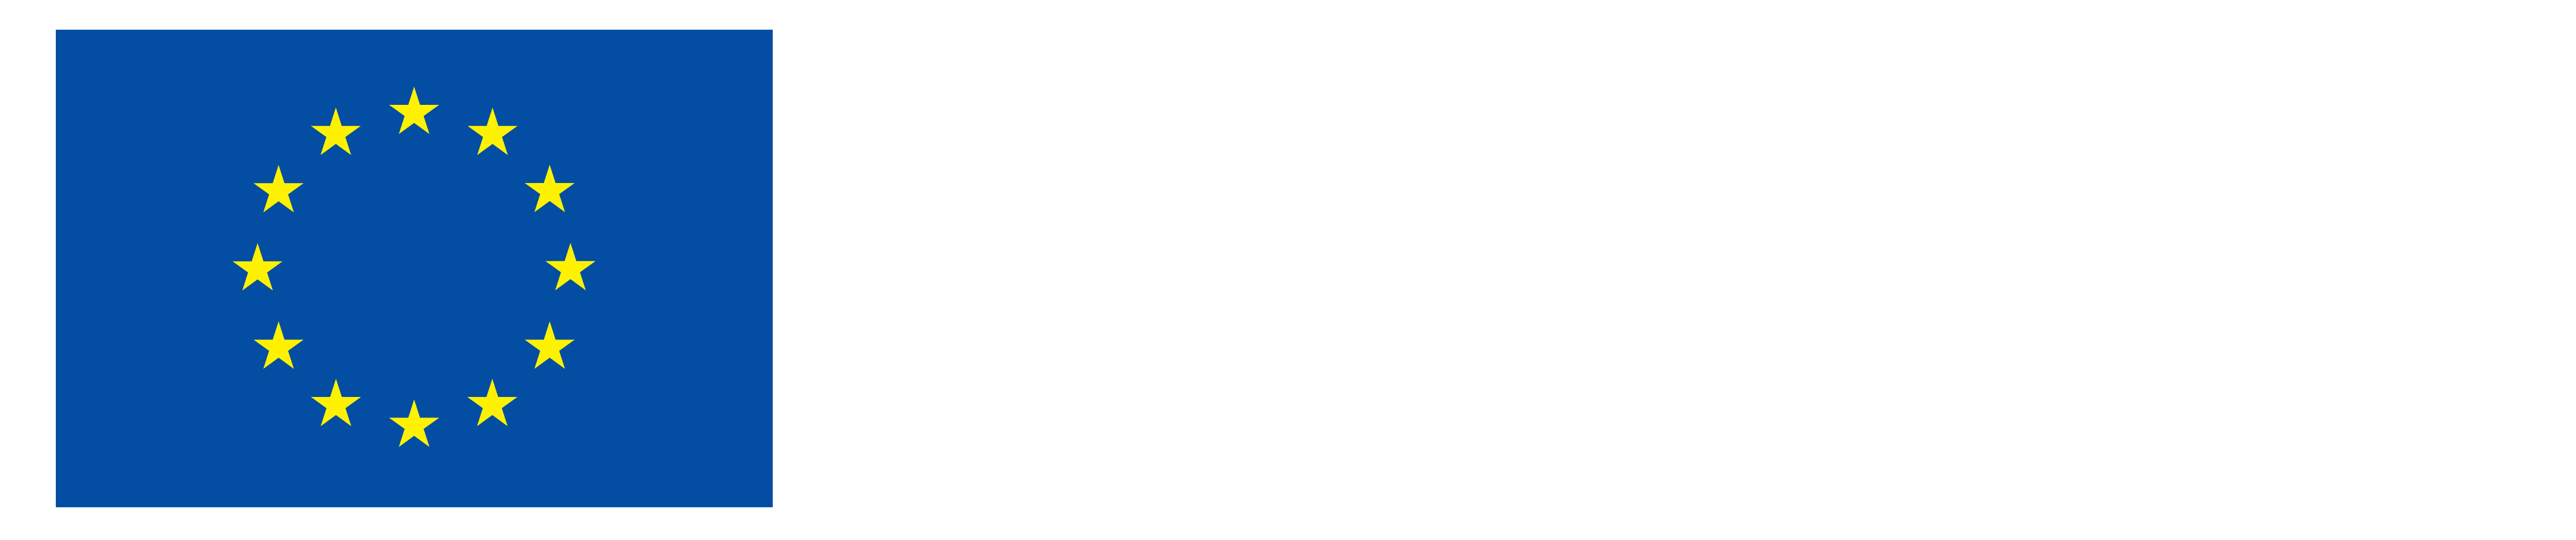 EU Funding Emblem